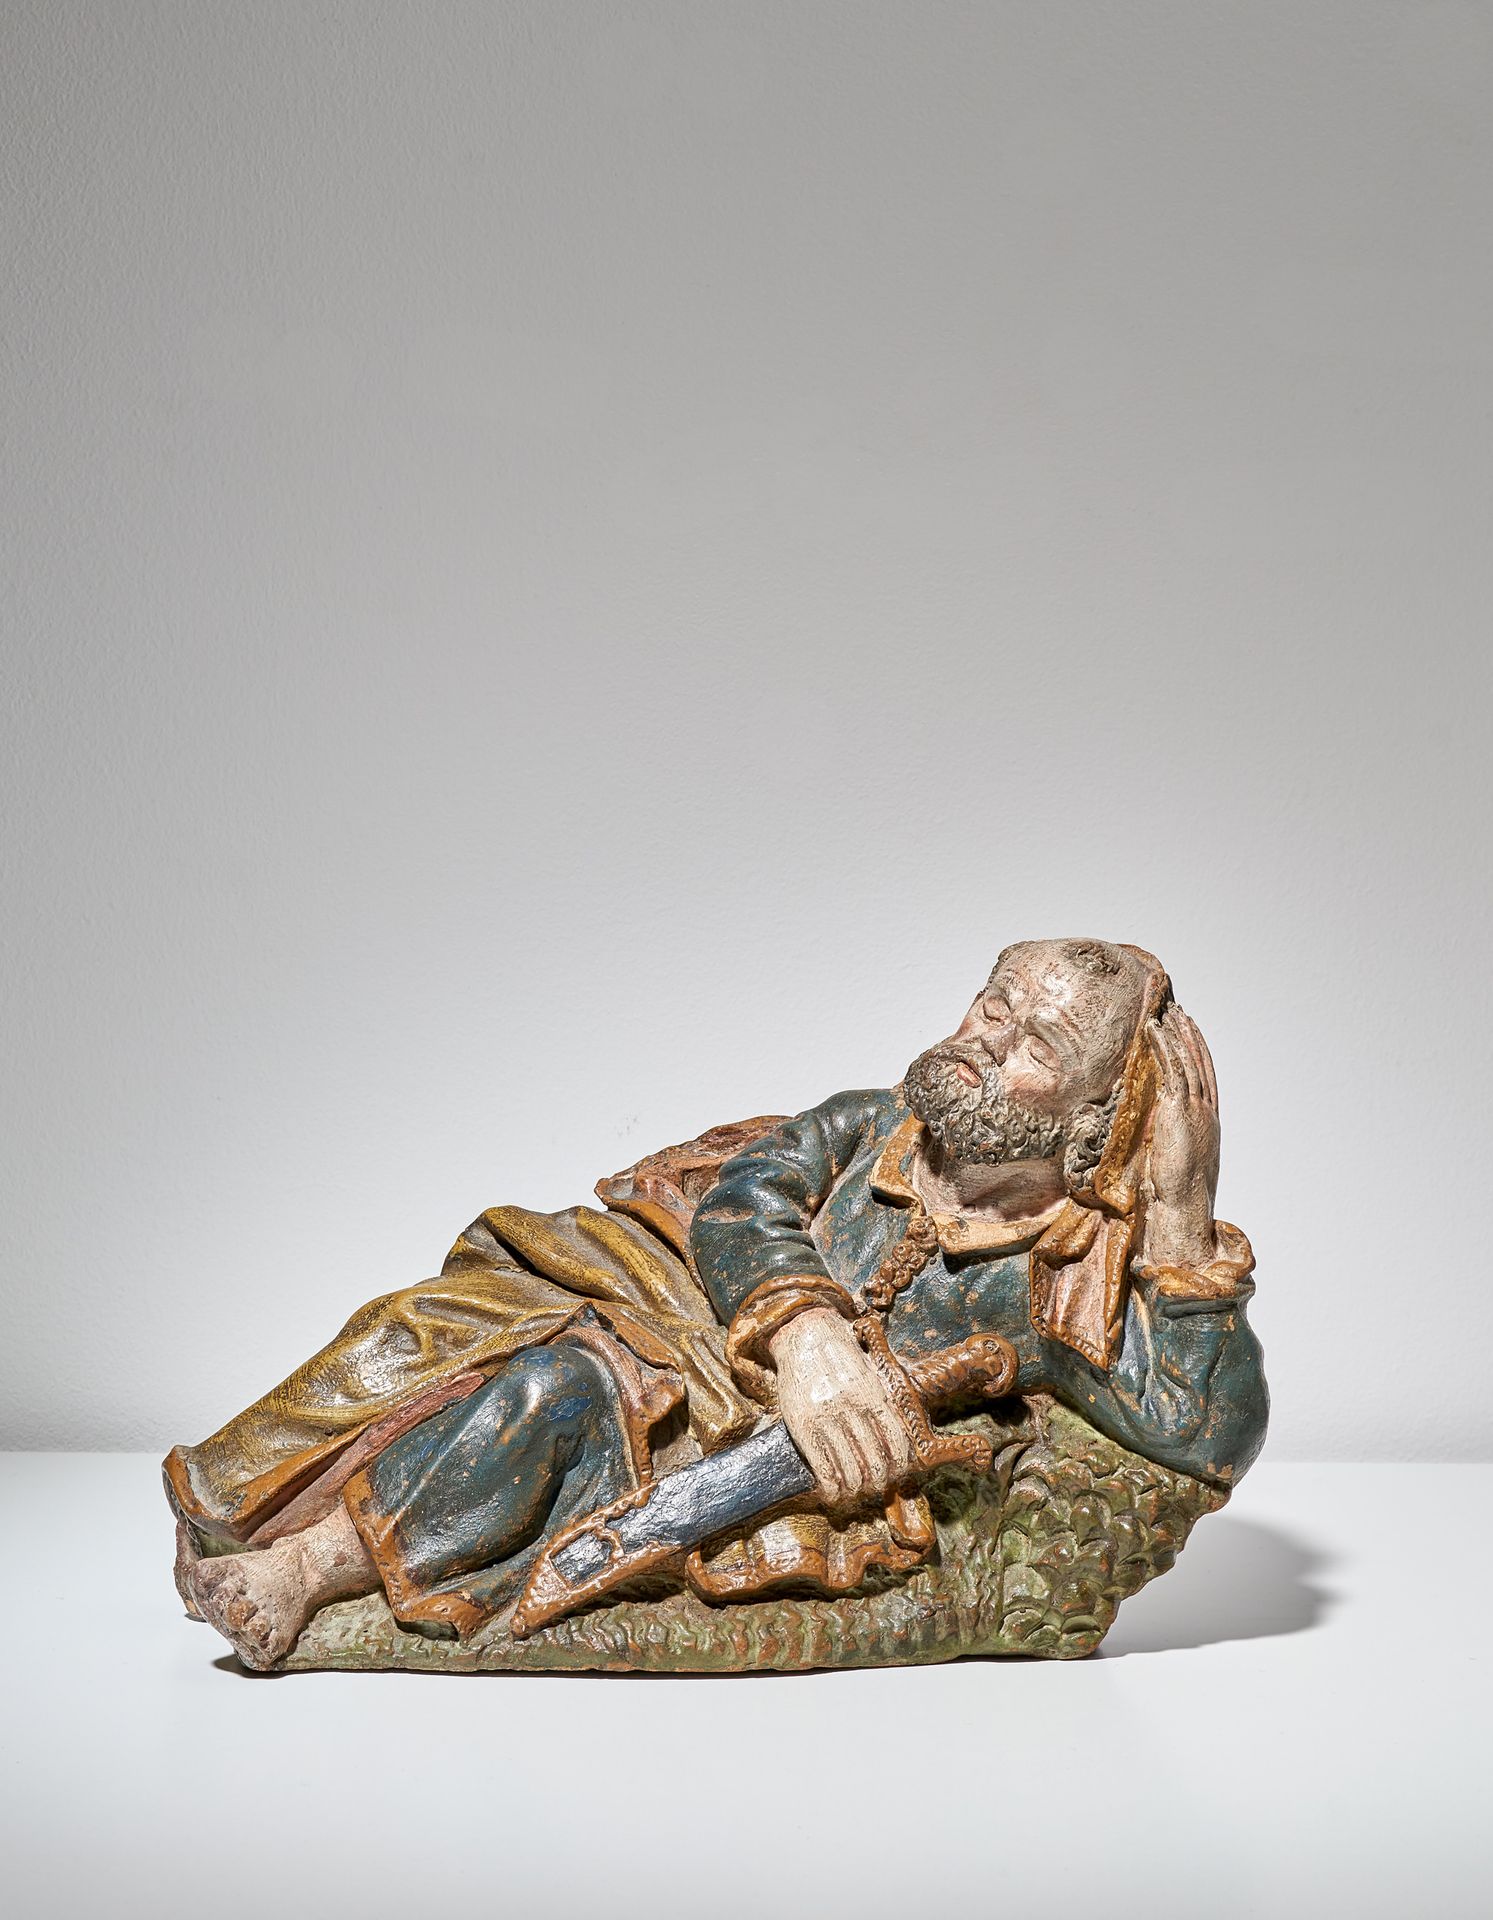 Null 睡觉的圣彼得

佛兰德斯，1649年

多色赤土，有GZ 1649的字样。

宽：24,5厘米